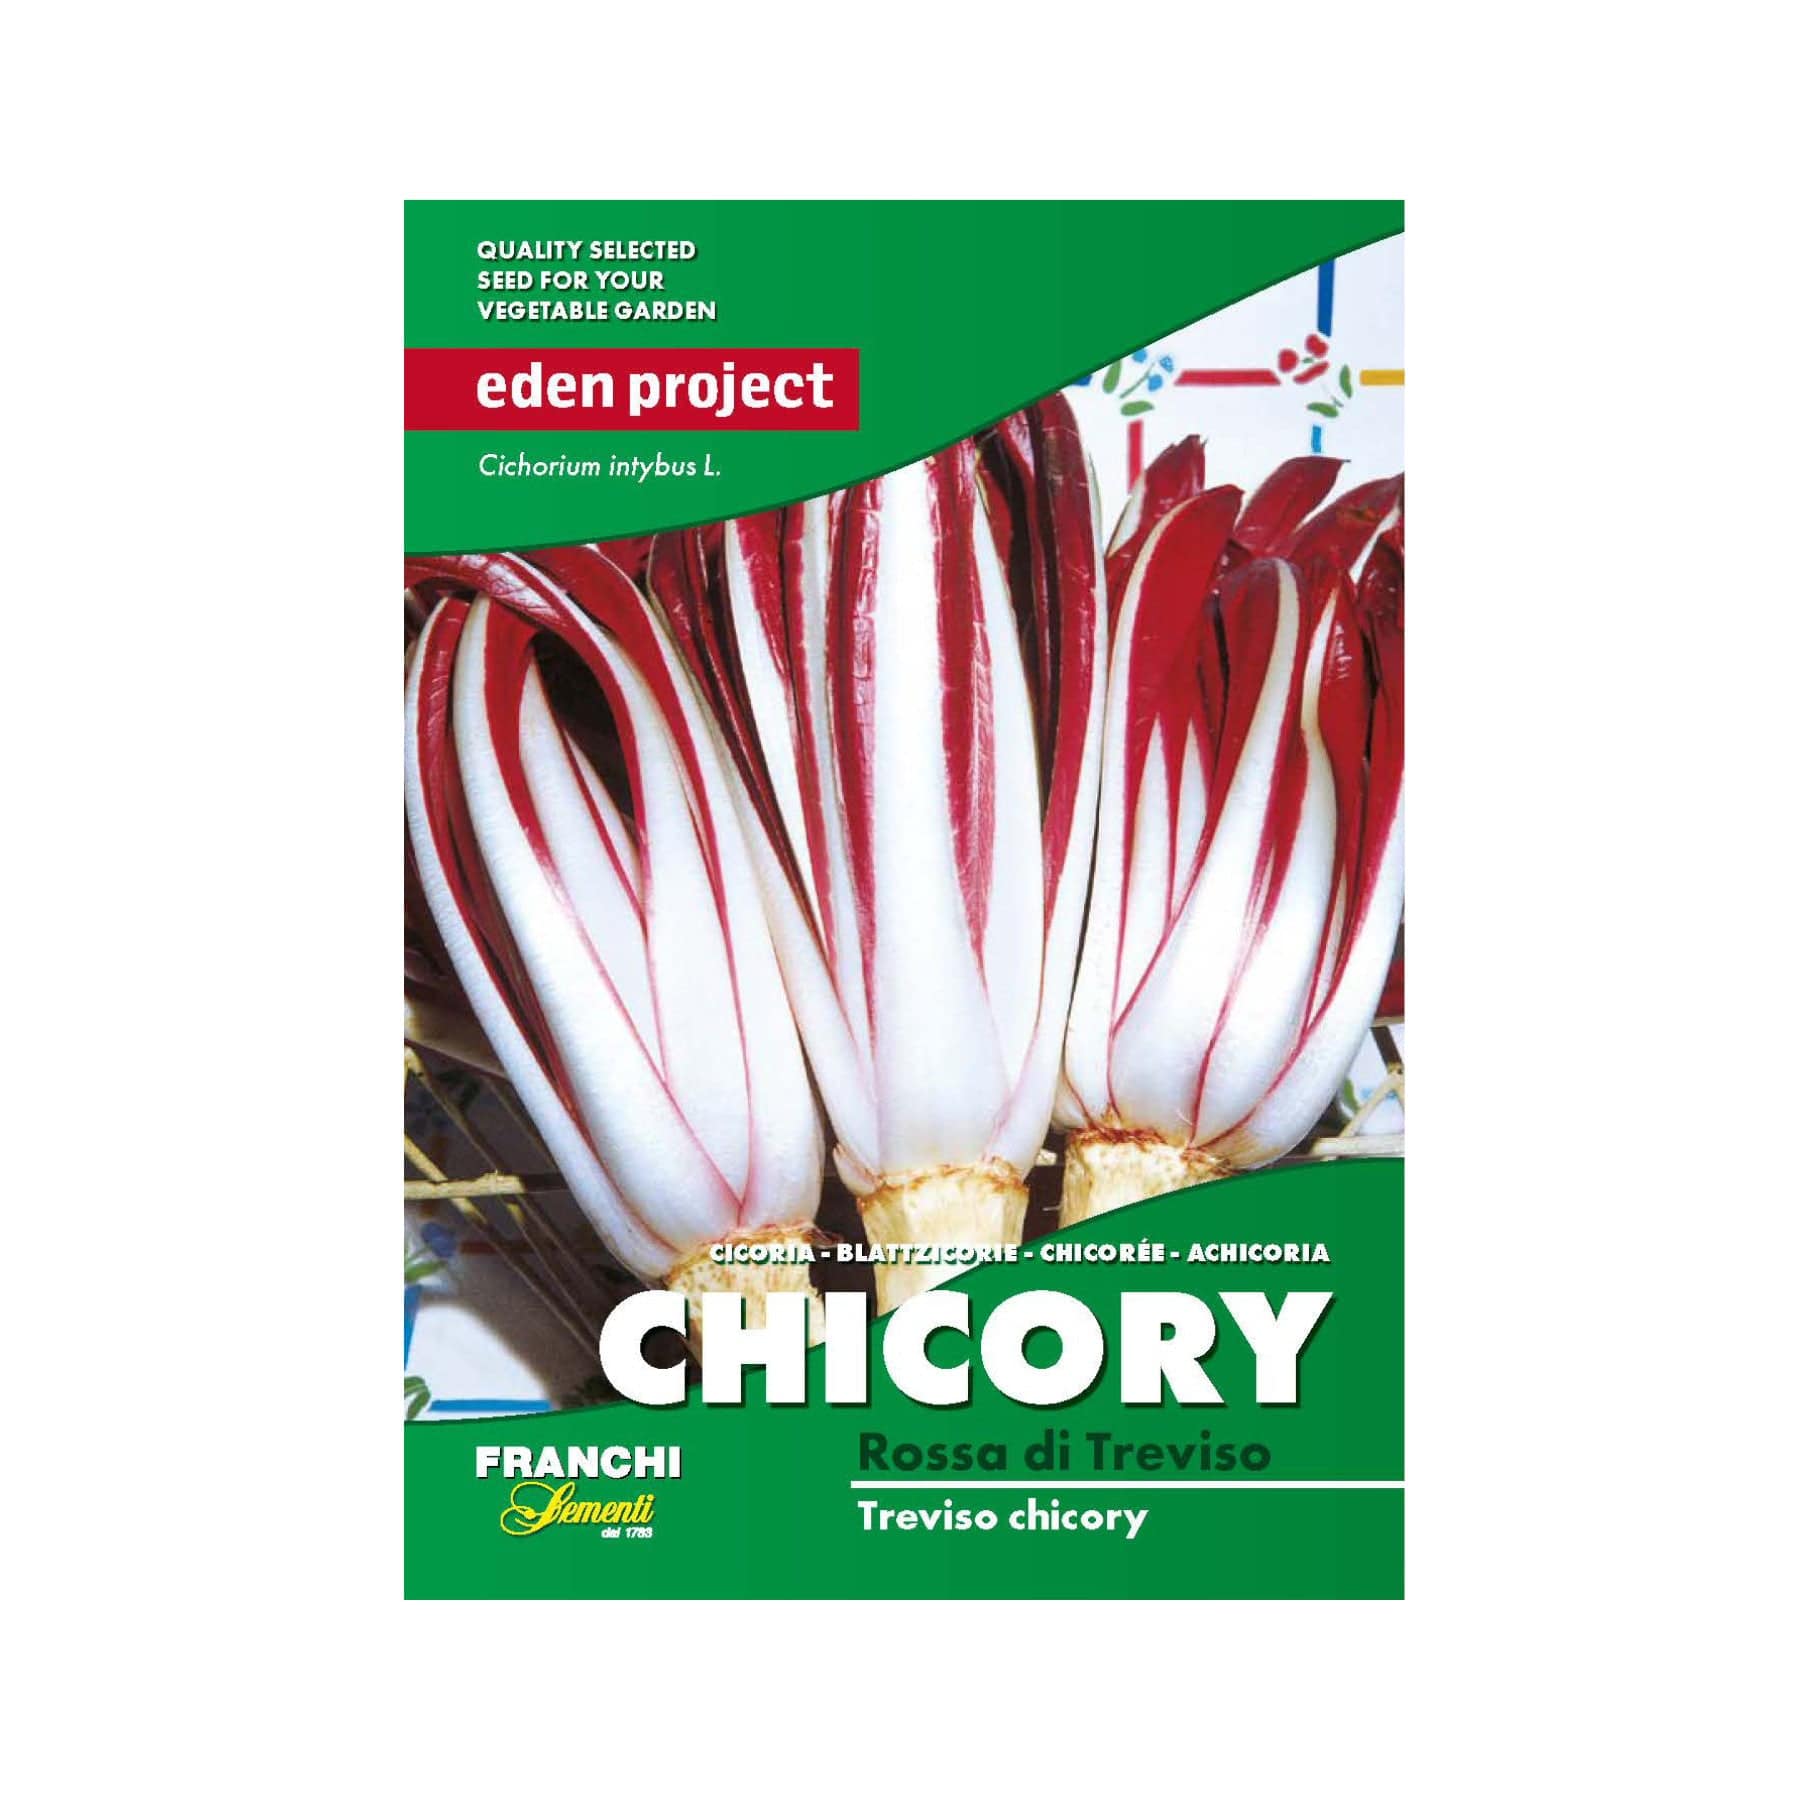 Chicory rossa di treviso seeds